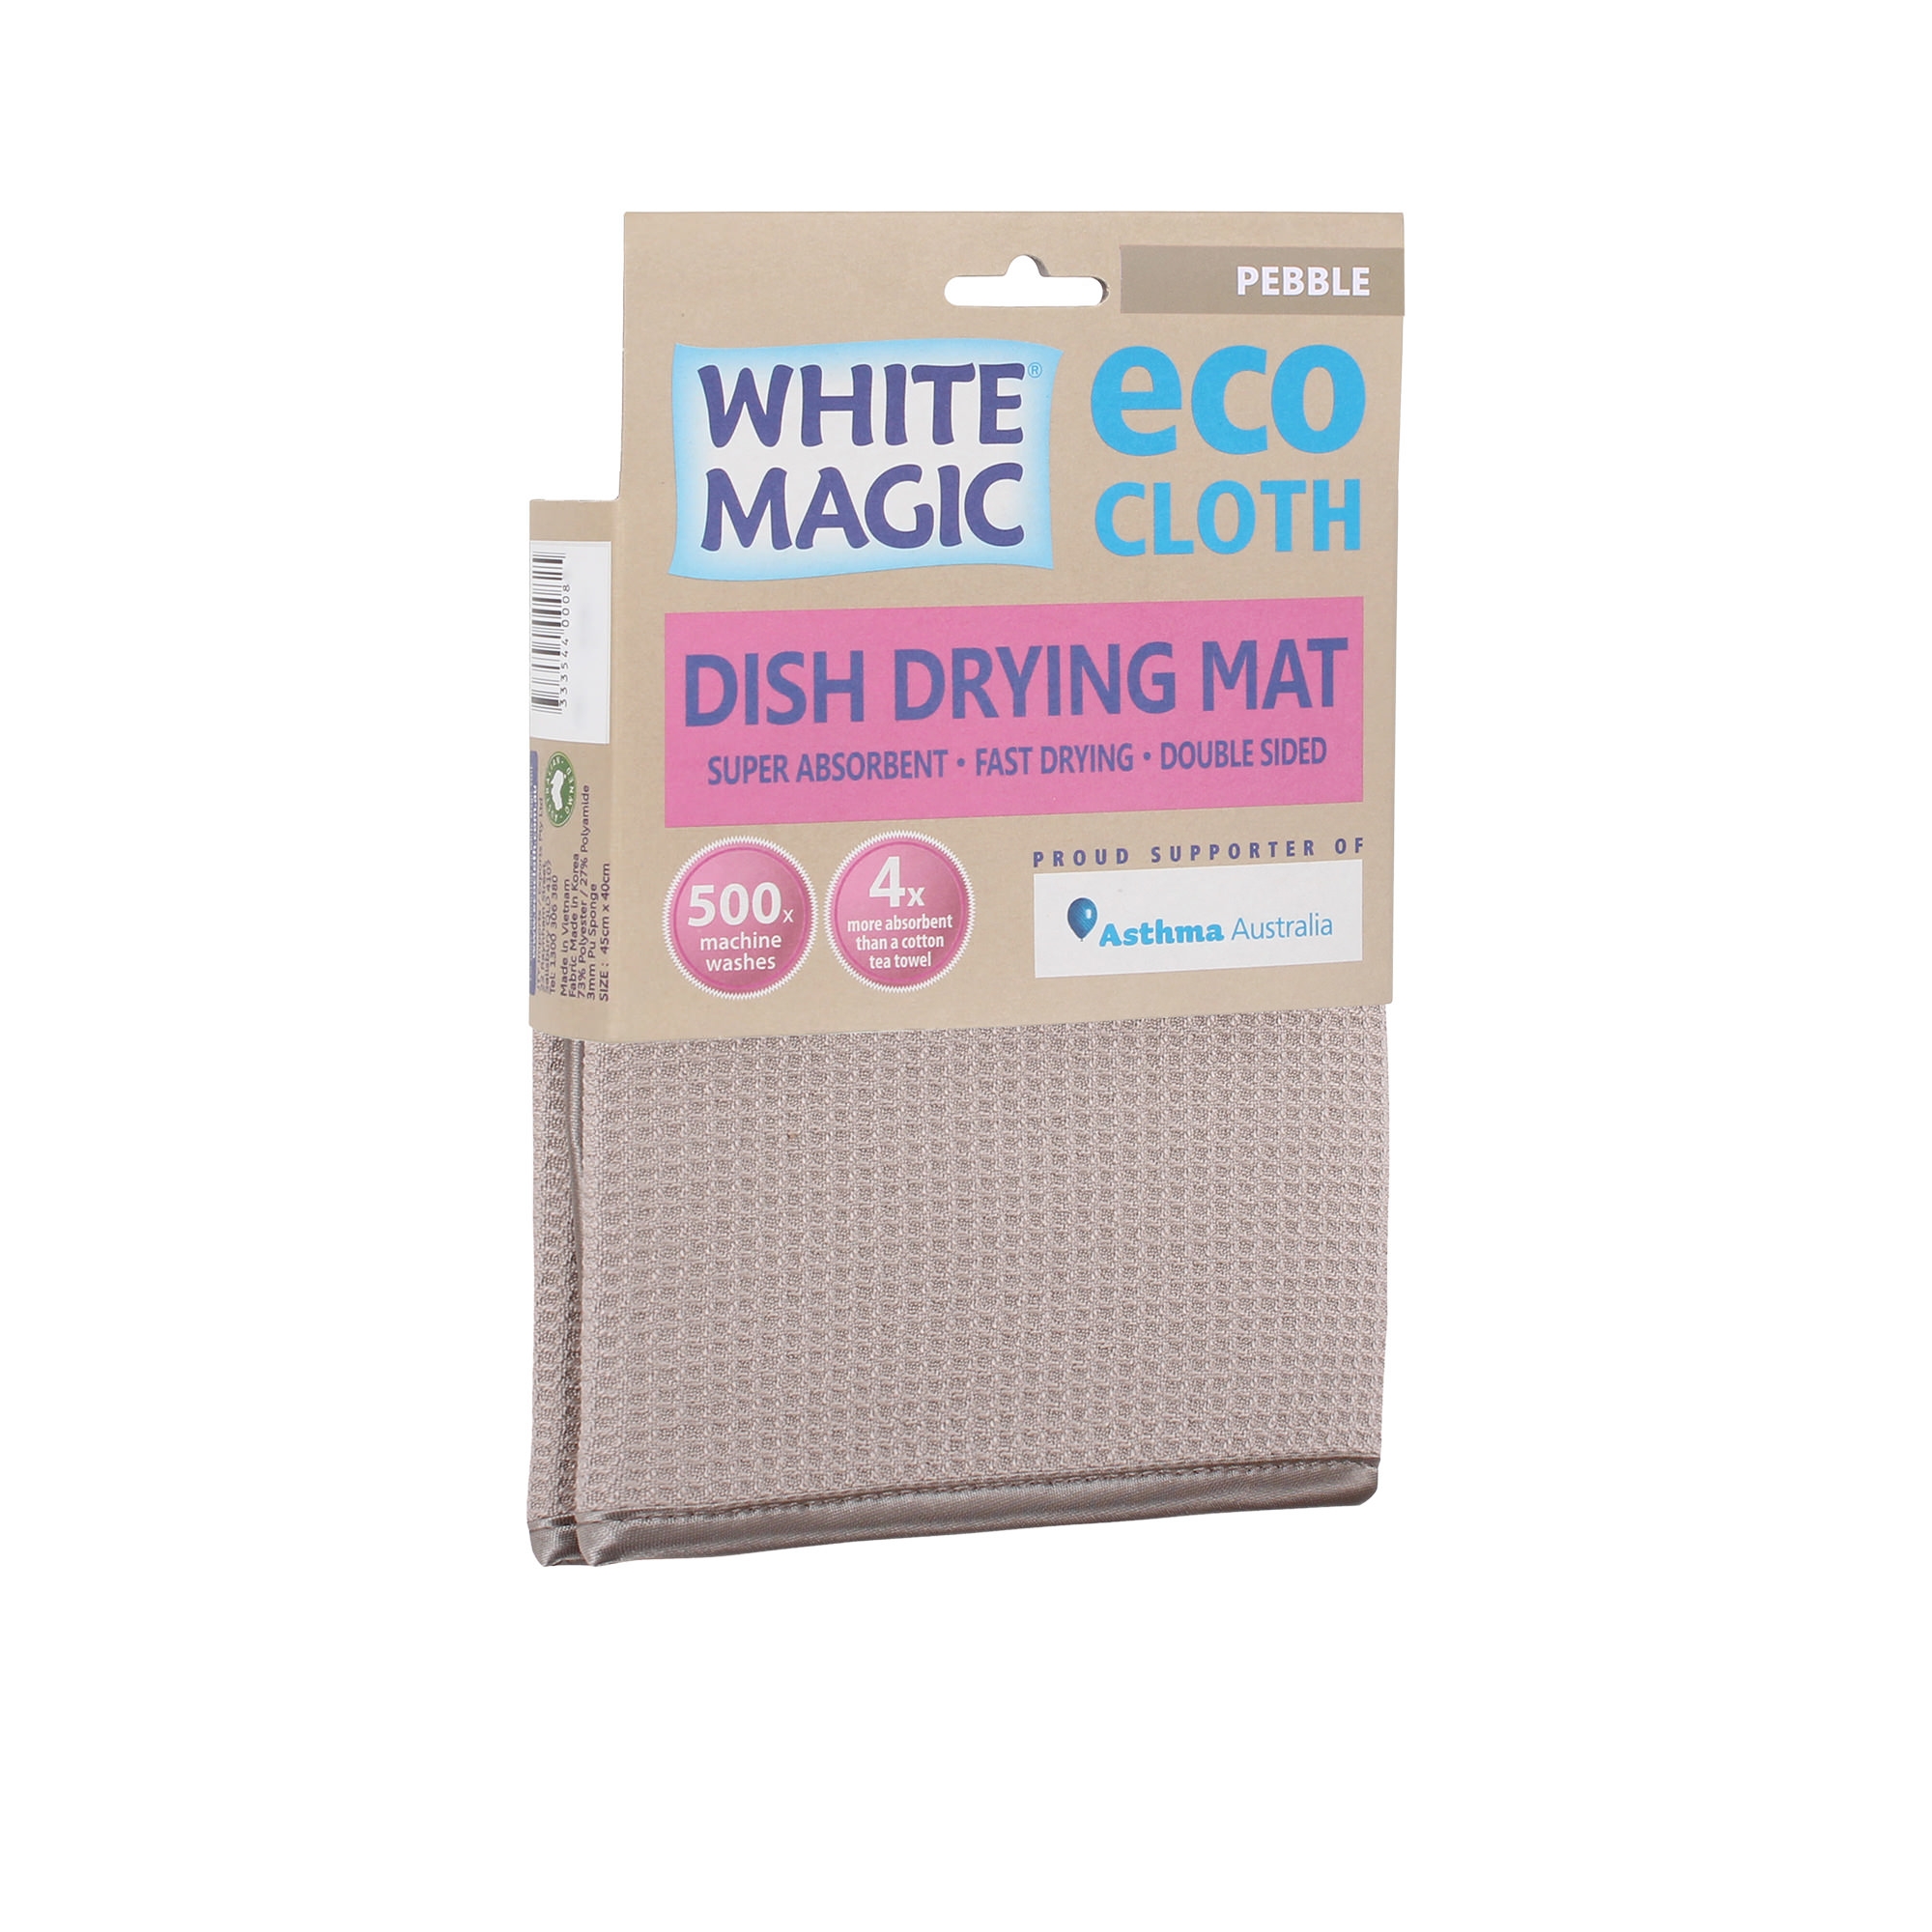 White Magic Eco Cloth Dish Drying Mat Pebble Image 2